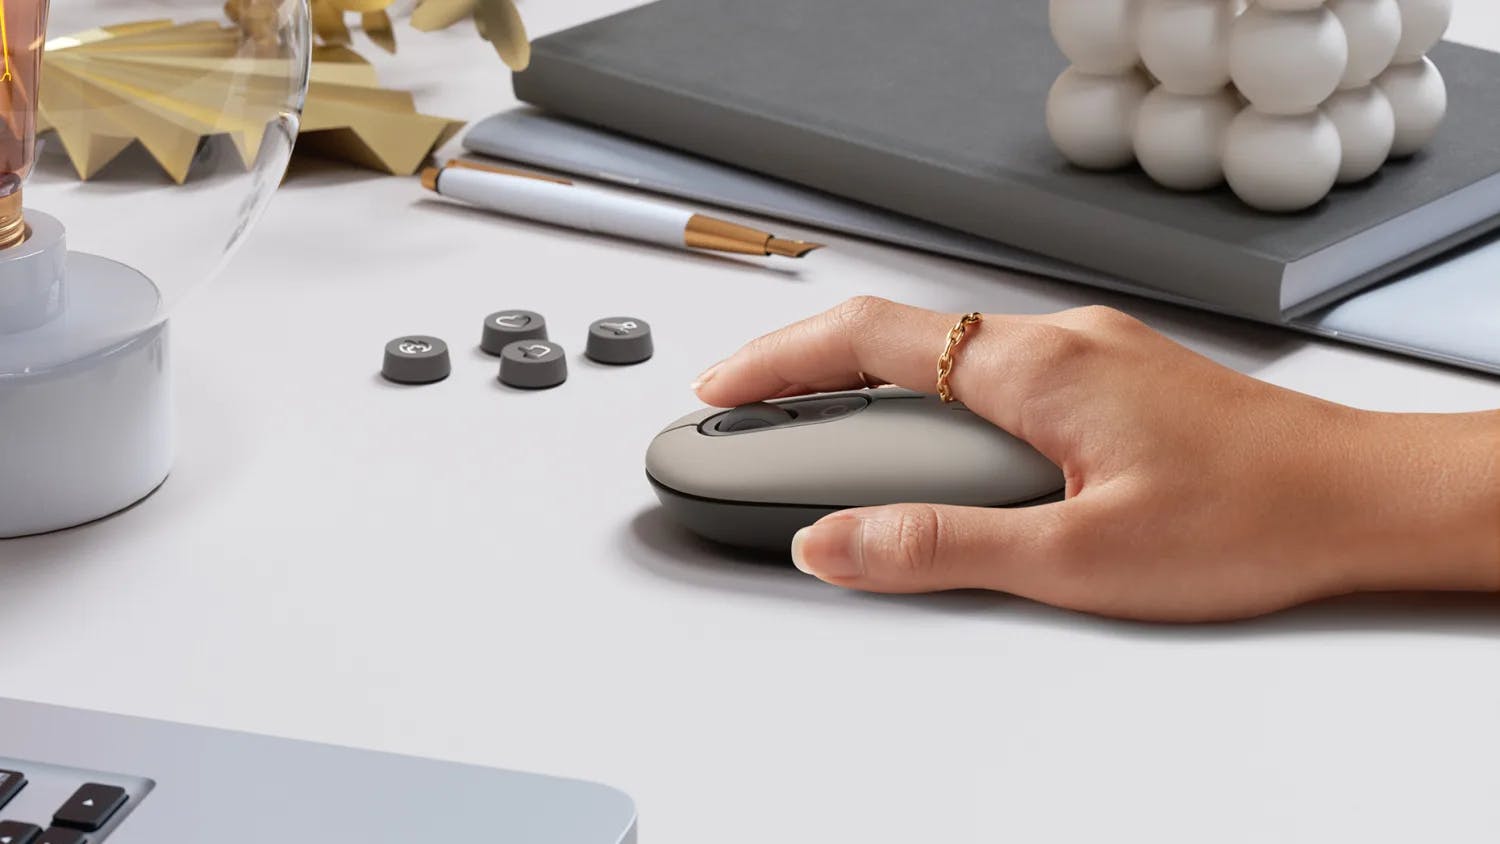 Logitech POP Wireless Mouse with Customizable Emoji Button - Mist Sand